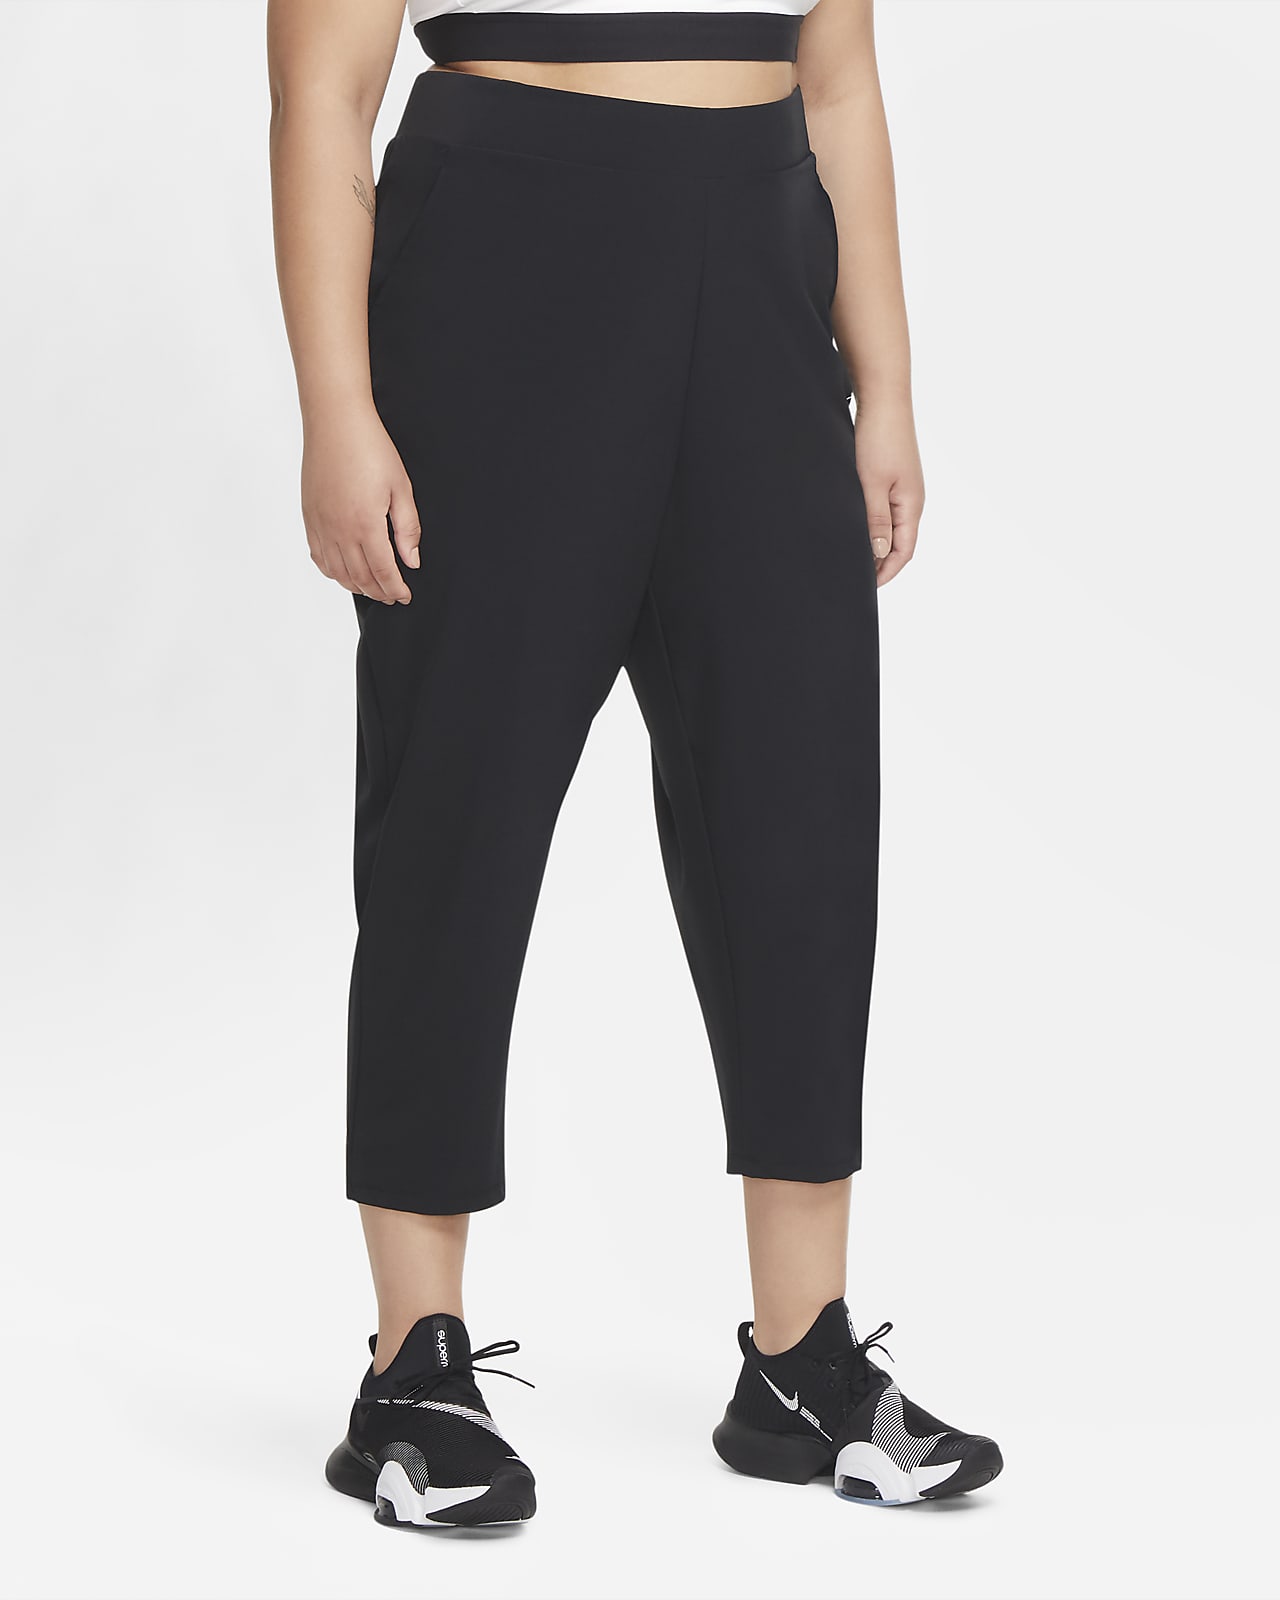 Various colour options Lower Solid Women Nike DriFit Track Pants Age  1545 Size M L